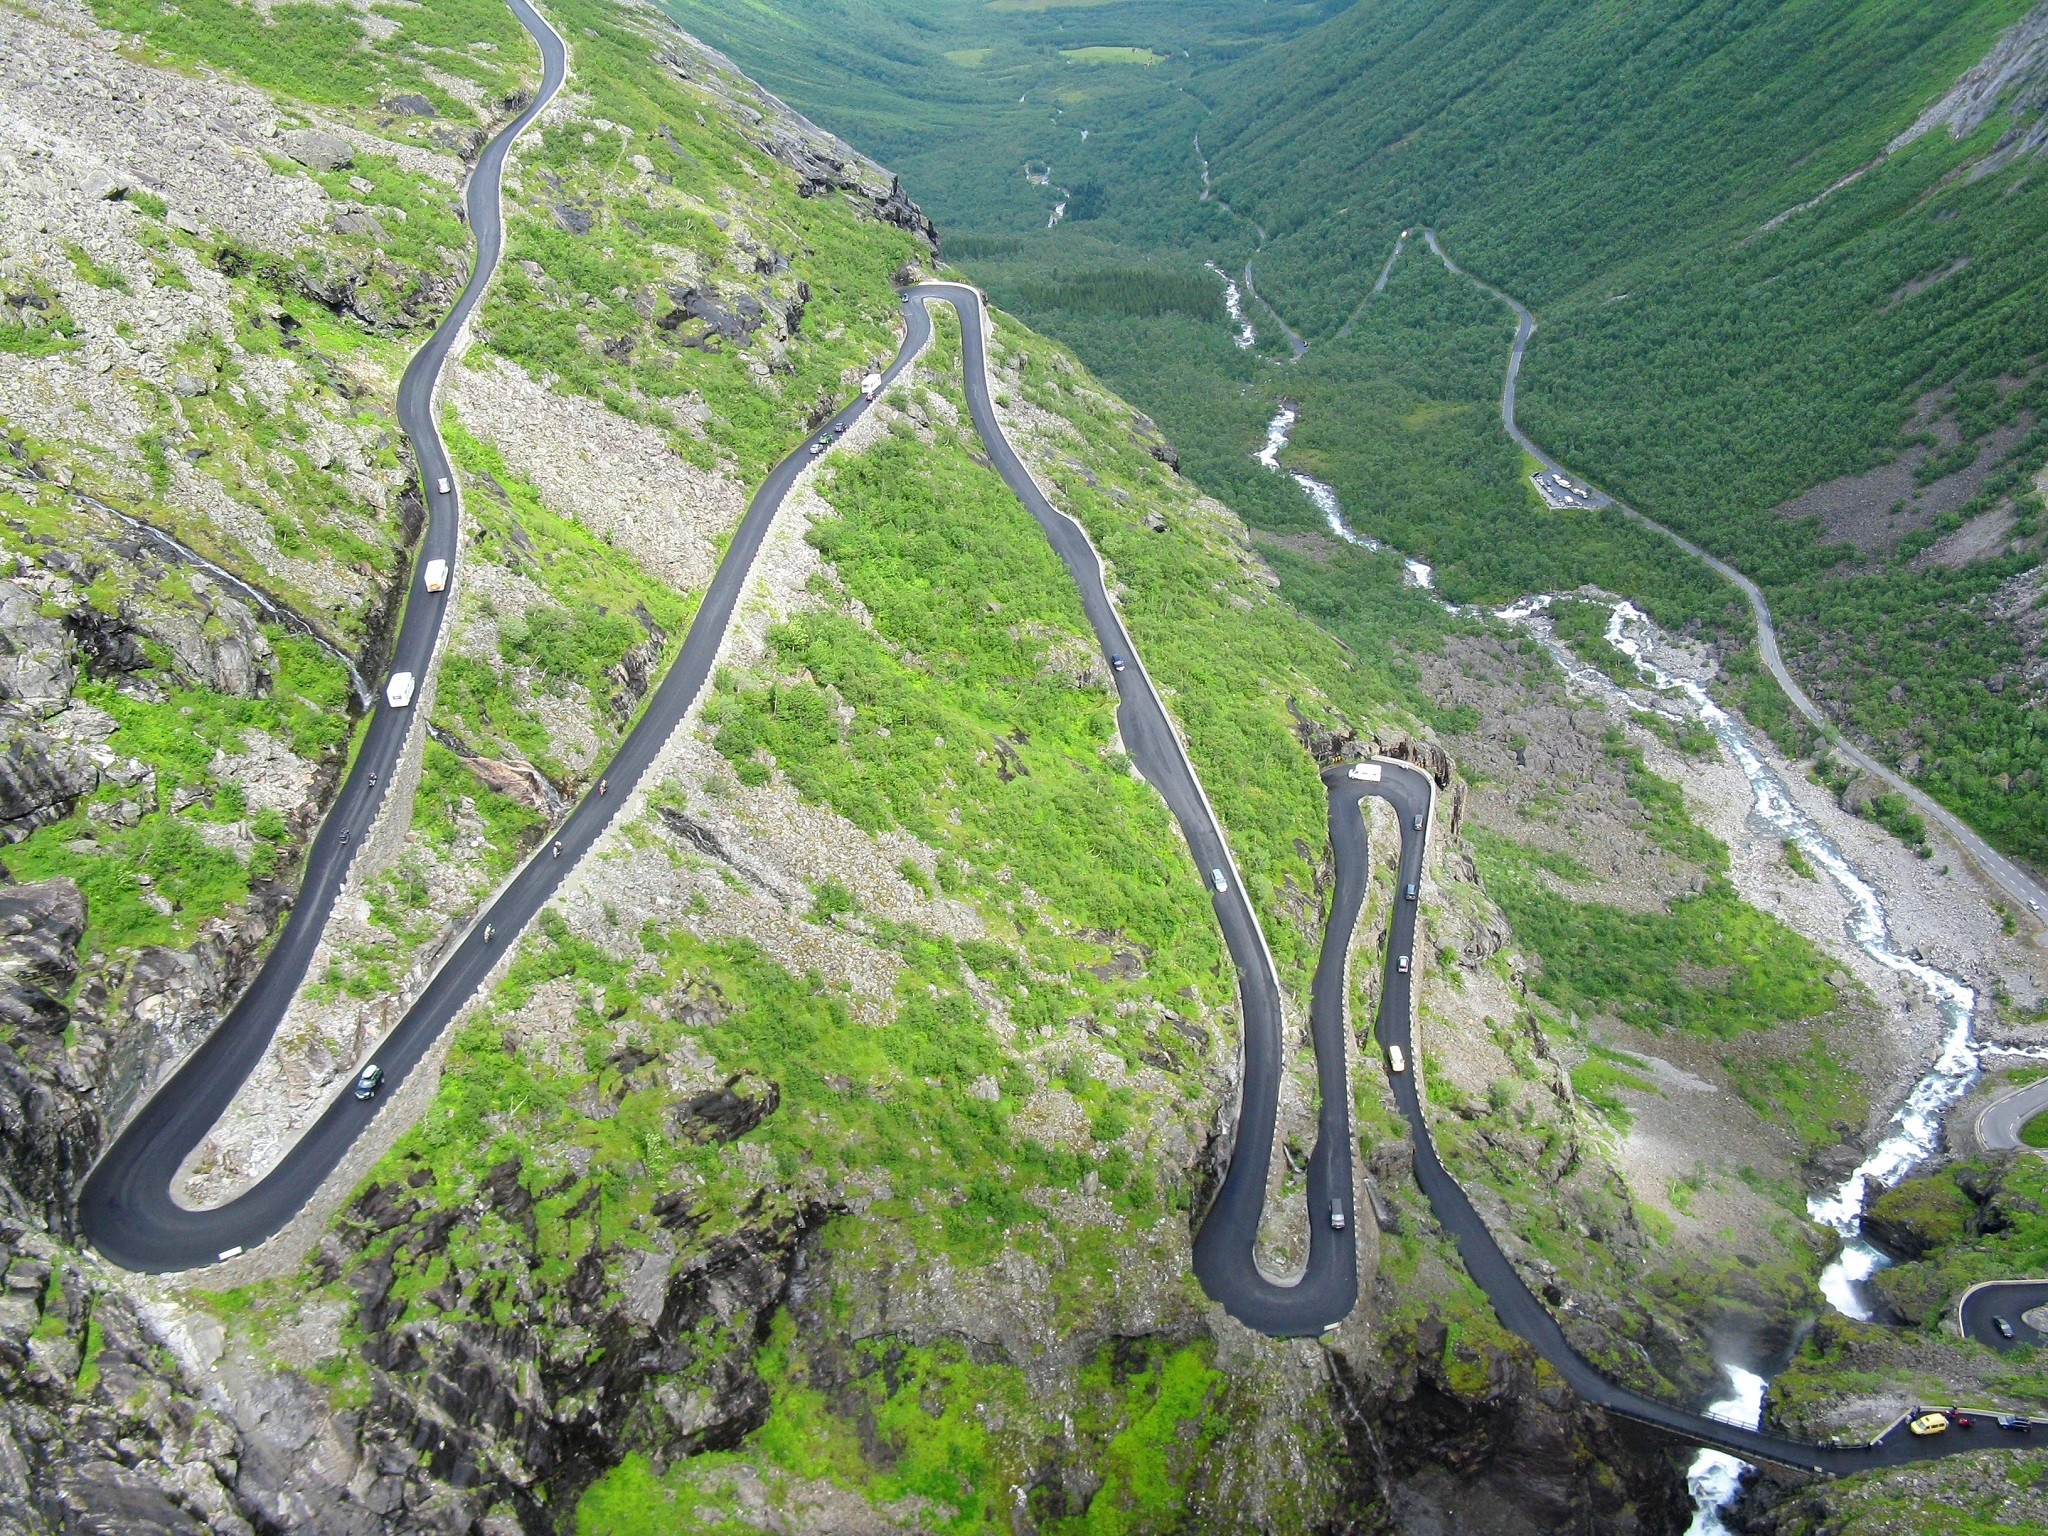 Trollstigen، یا جاده ترول - دریابید که چرا ارزش سوار شدن را دارد!